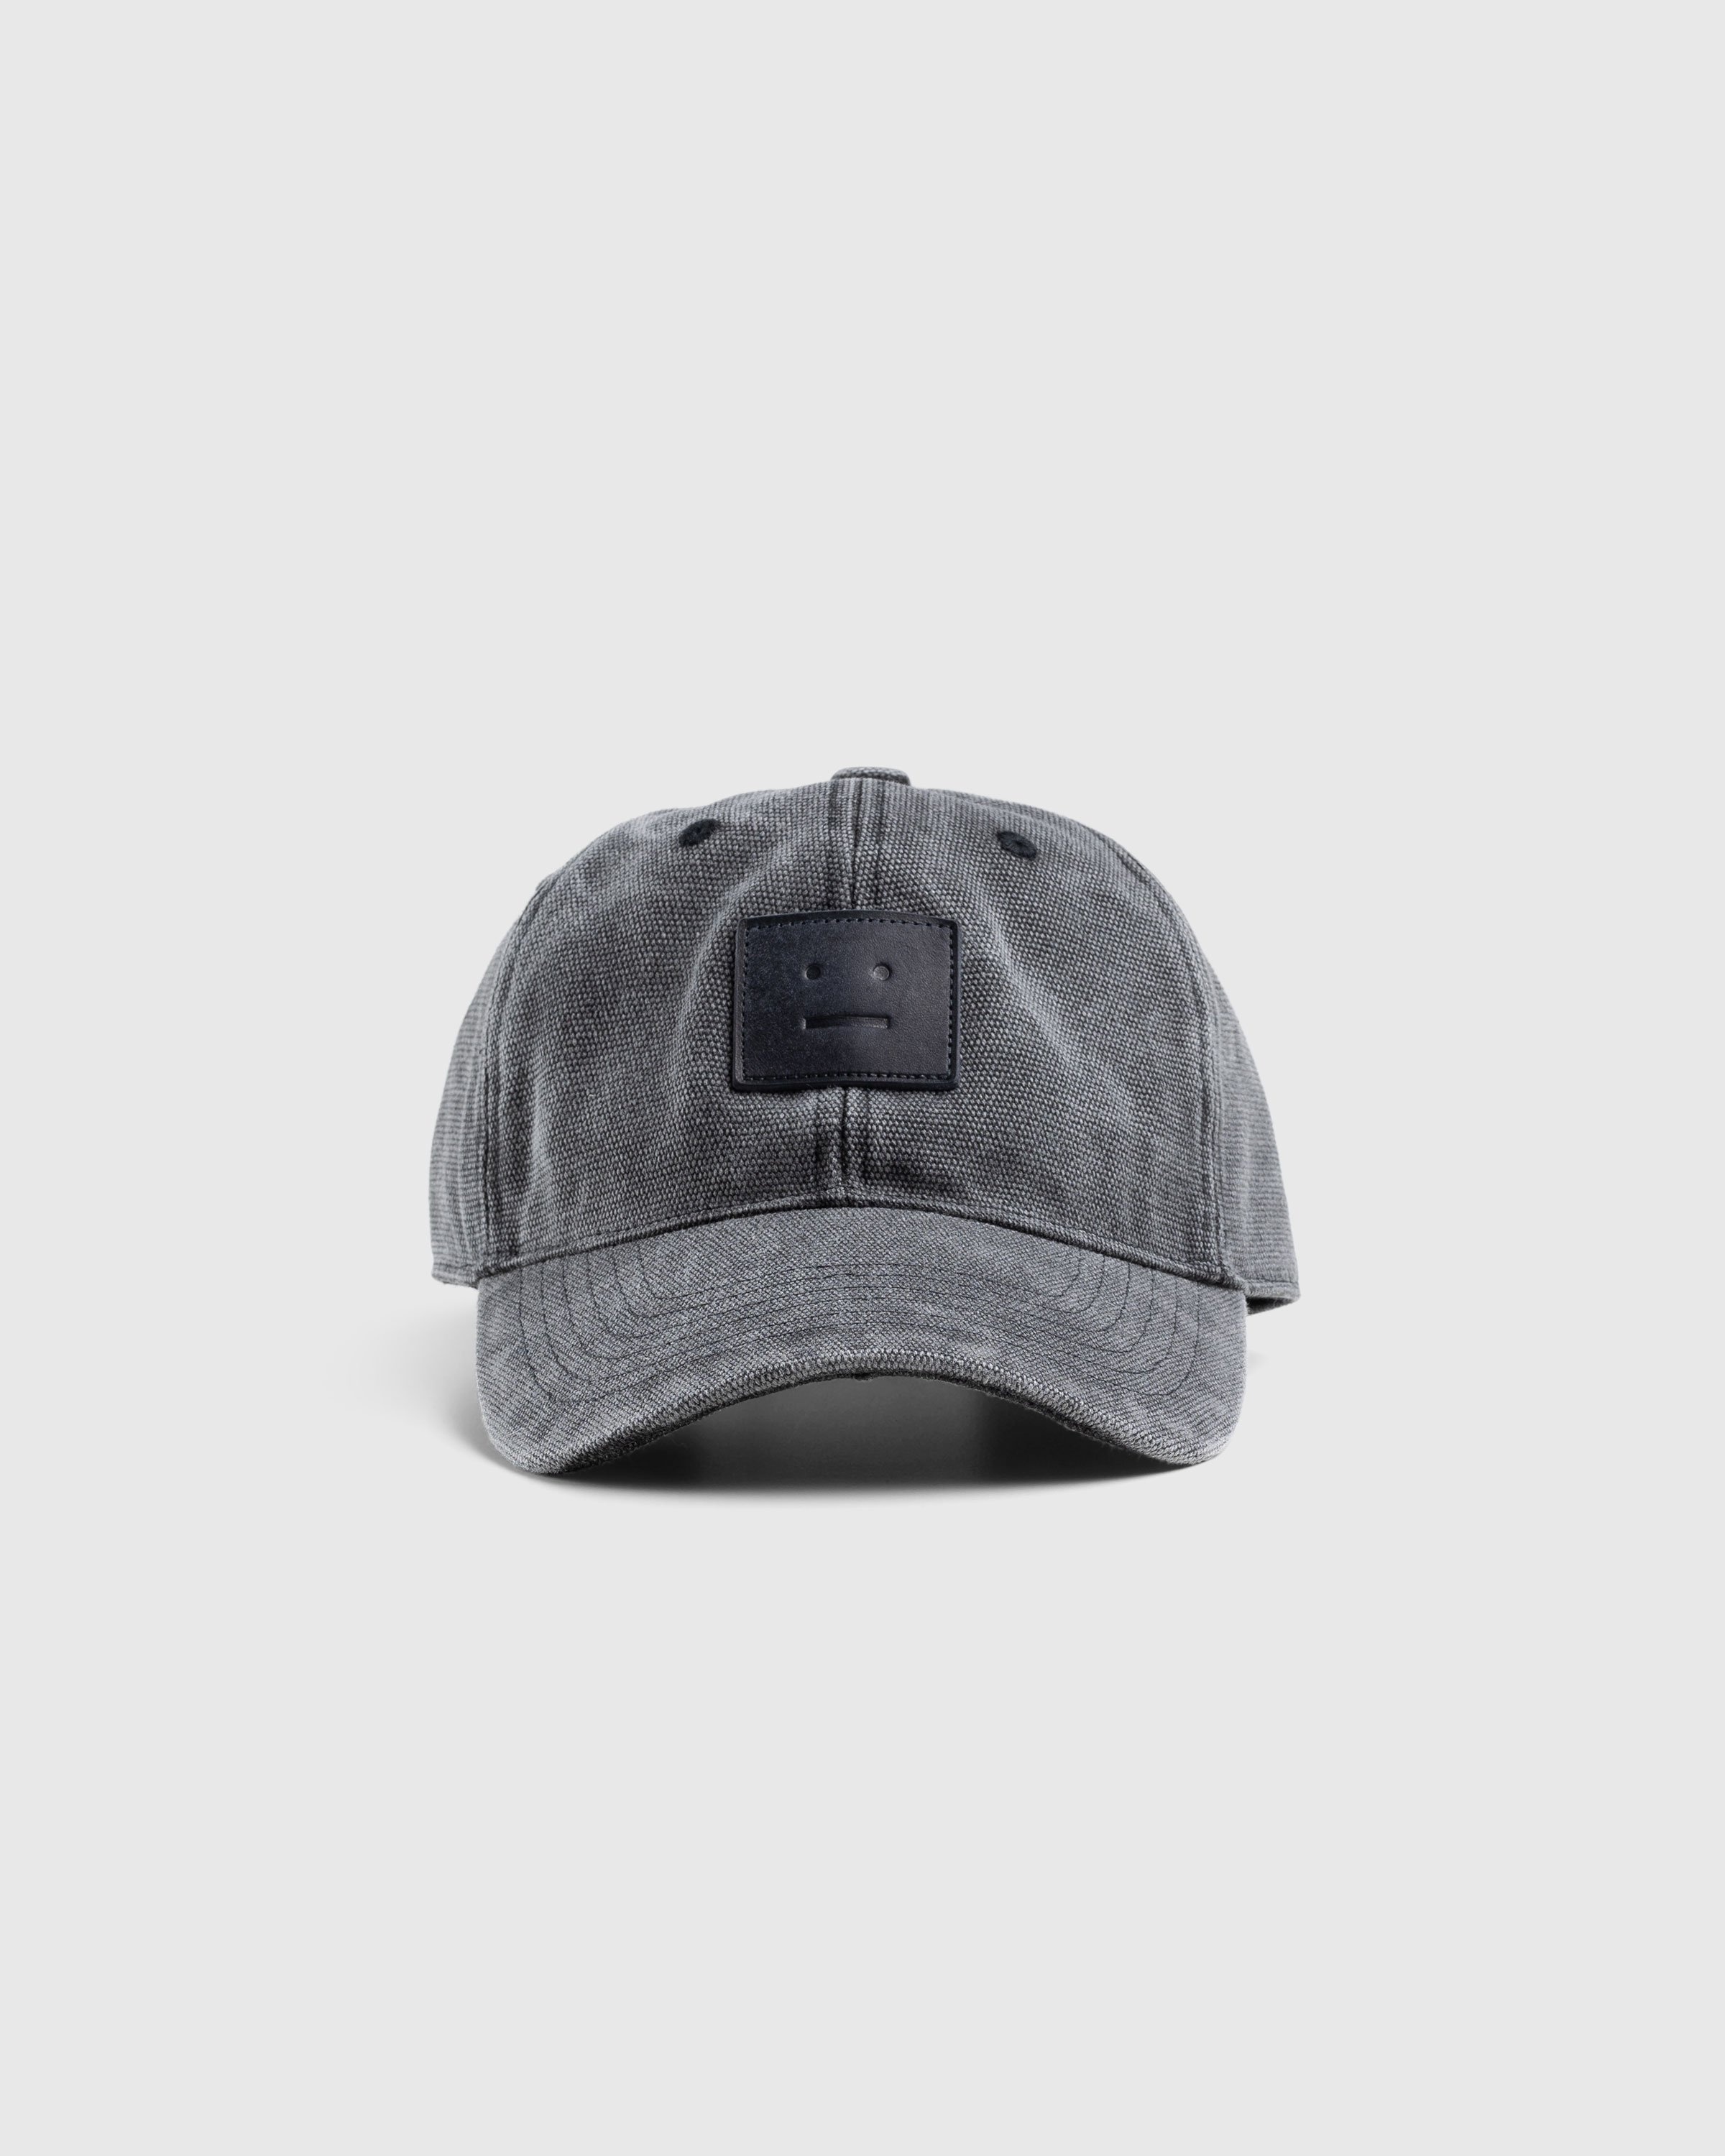 Acne Studios – Leather Face Logo Baseball Cap Grey - Hats - Grey - Image 2